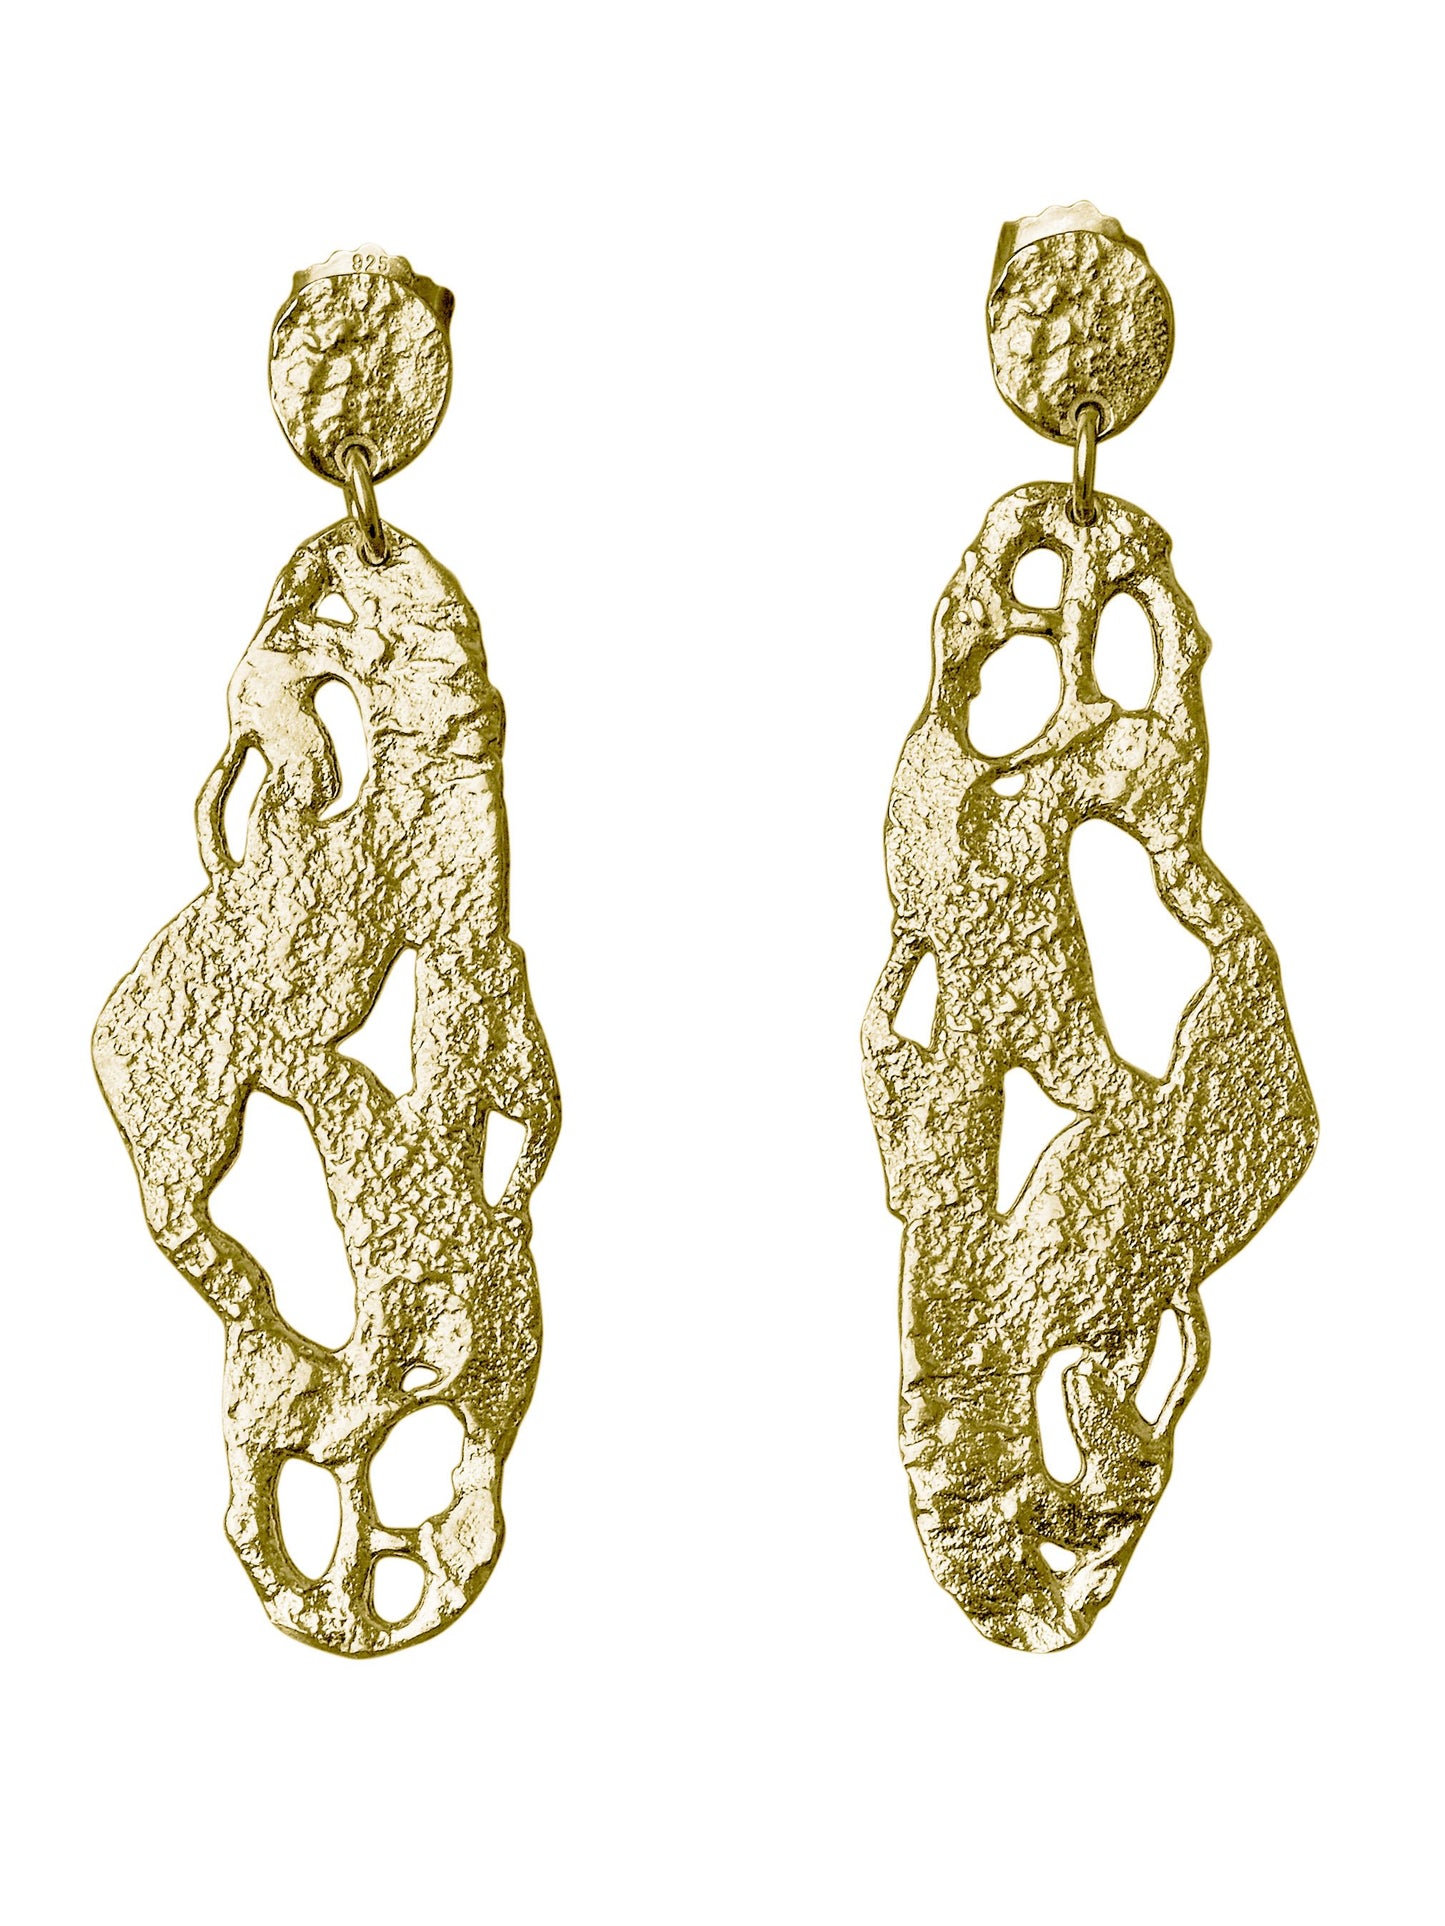 Organic Shapes - Seaweed earrings (long)